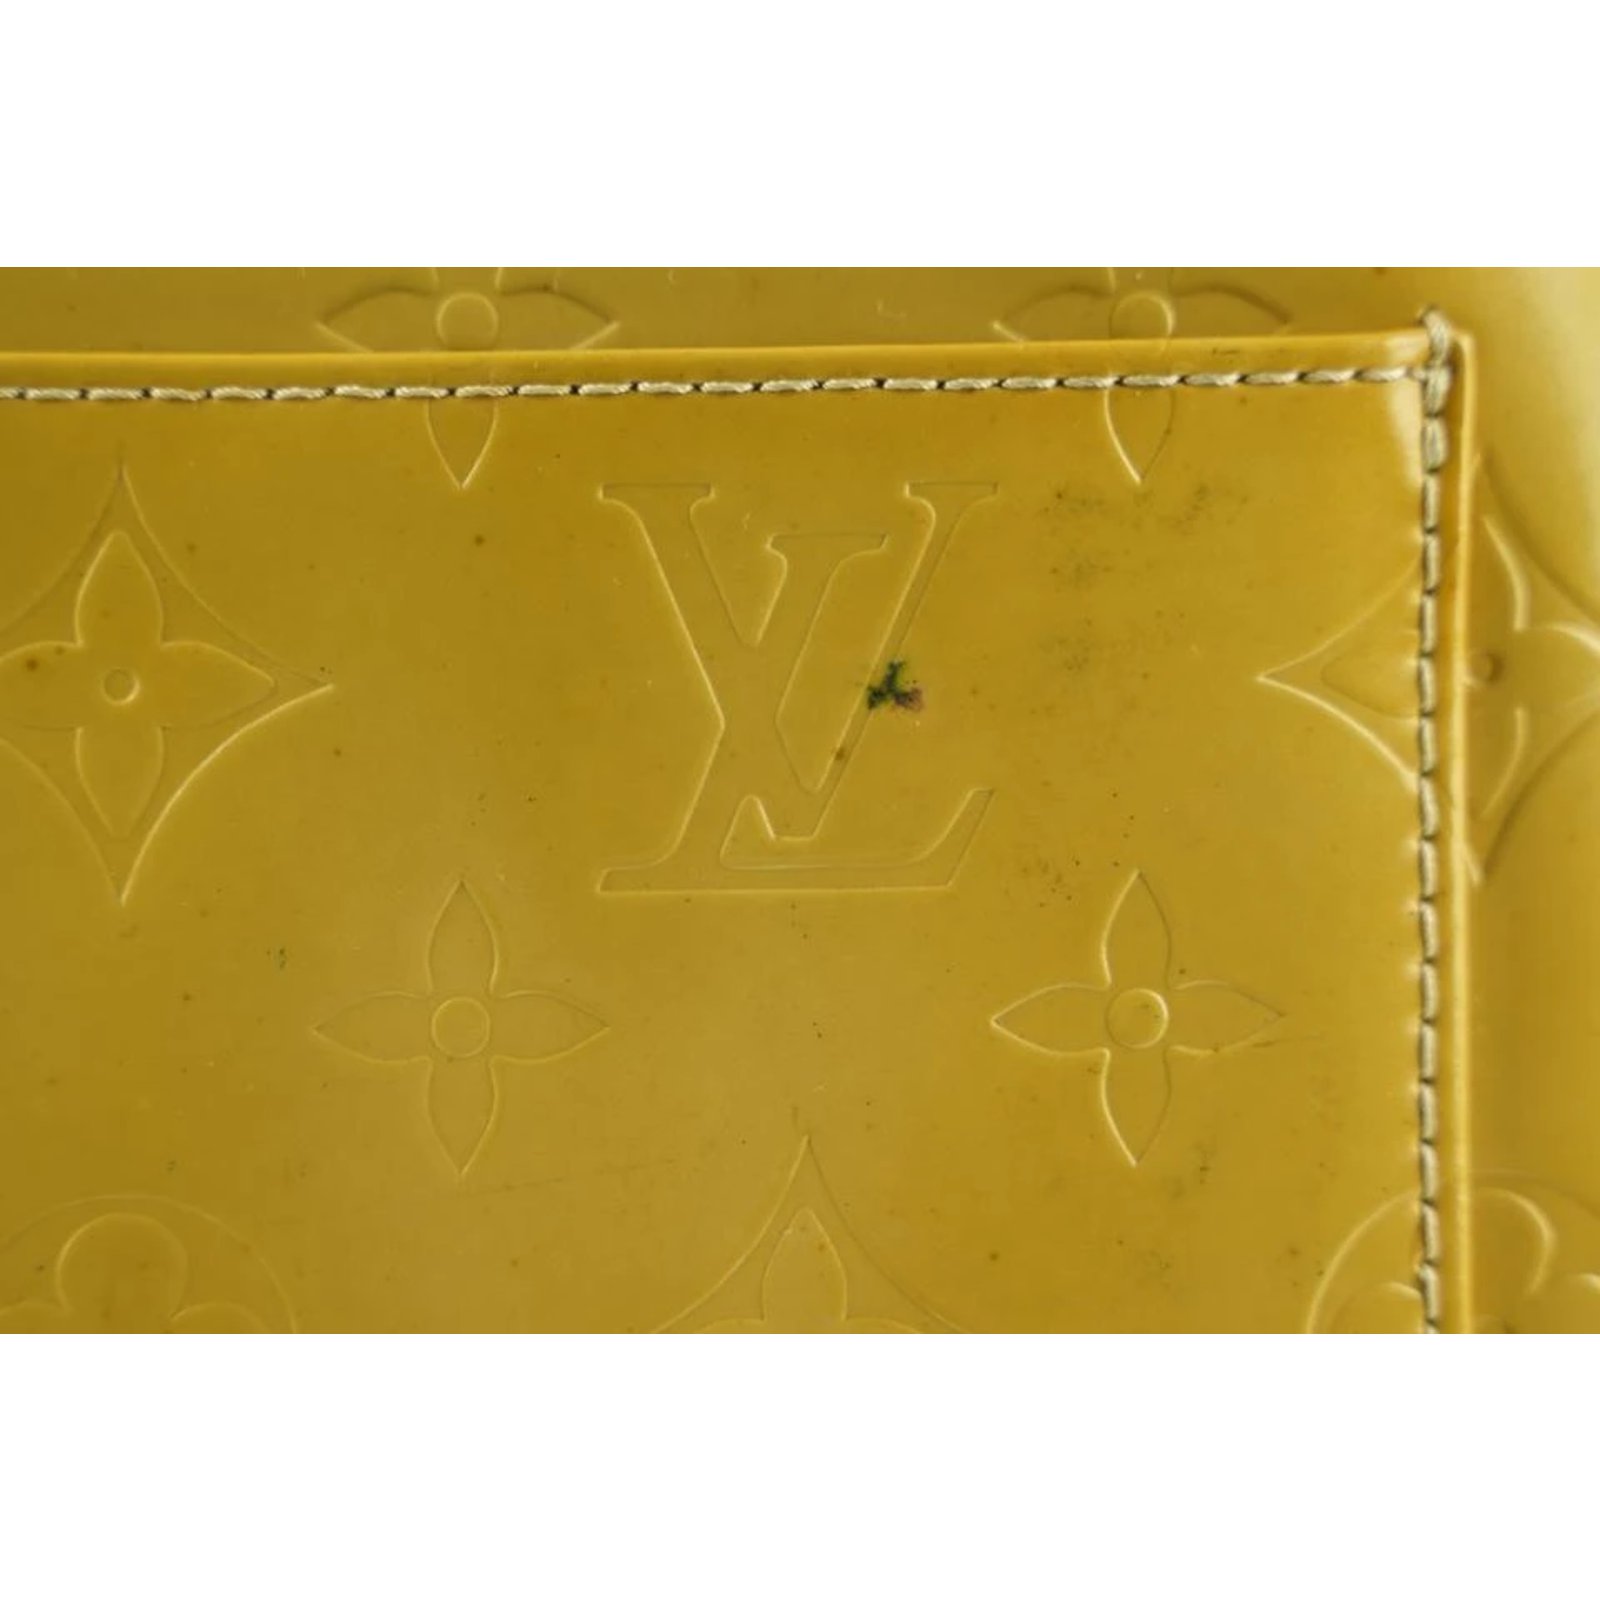 Louis Vuitton Yellow Monogram Vernis Mercer Keepall Duffle Bag 88lv317s